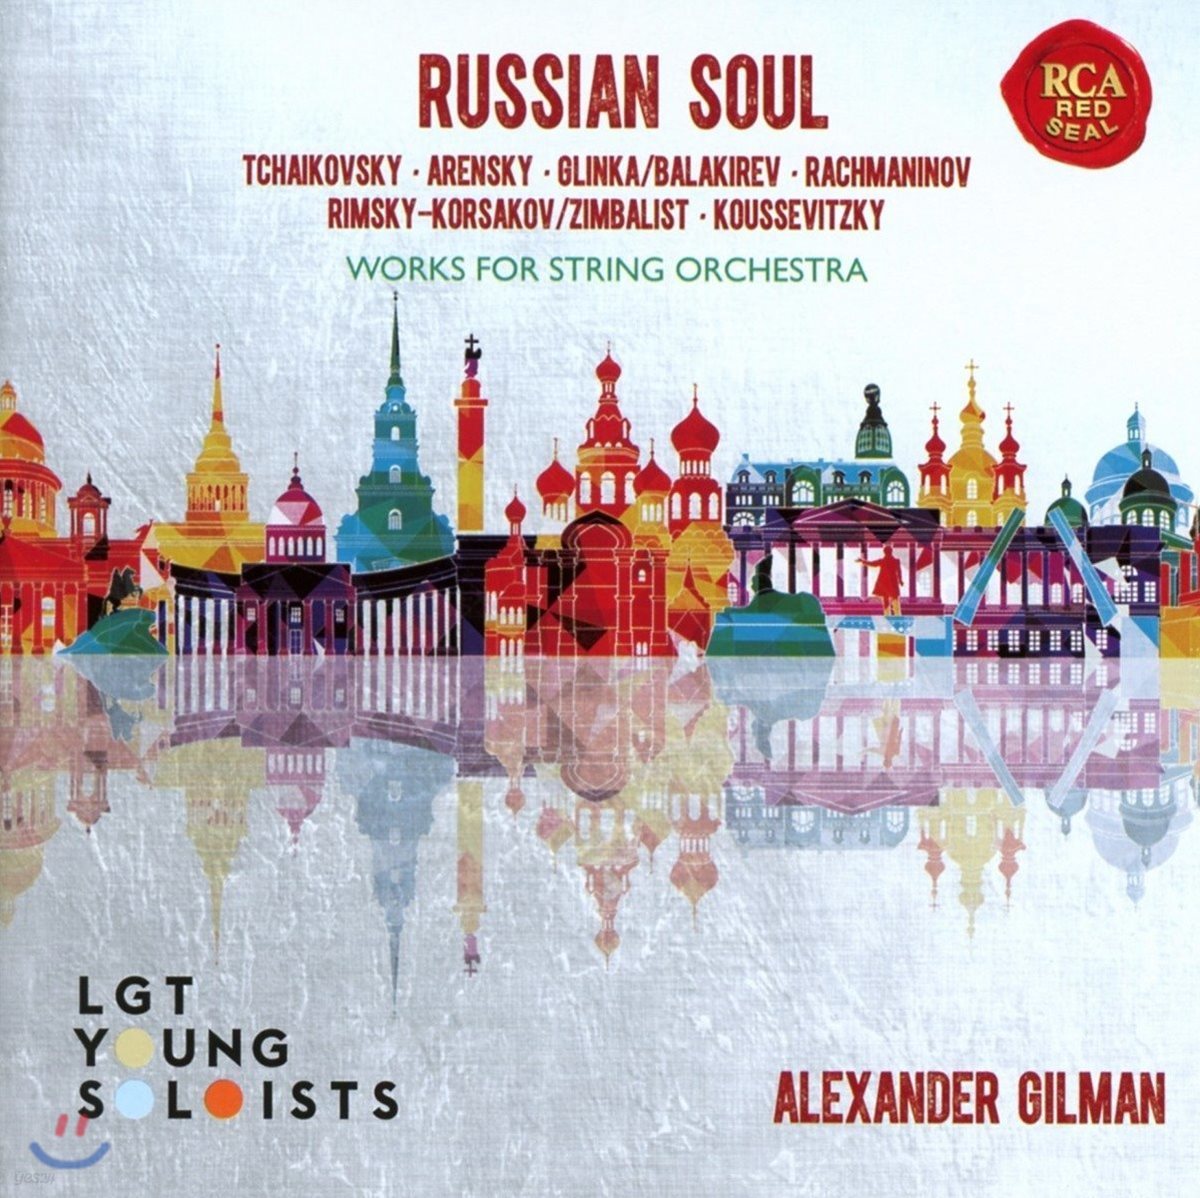 LGT Young Soloists 러시안 소울 - 차이코프스키 / 아렌스키 / 라흐마니노프: 현악 오케스트라를 위한 작품 (Russian Soul - Tchaikovsky / Arensky / Rachmaninov: Works for String Orchestra)